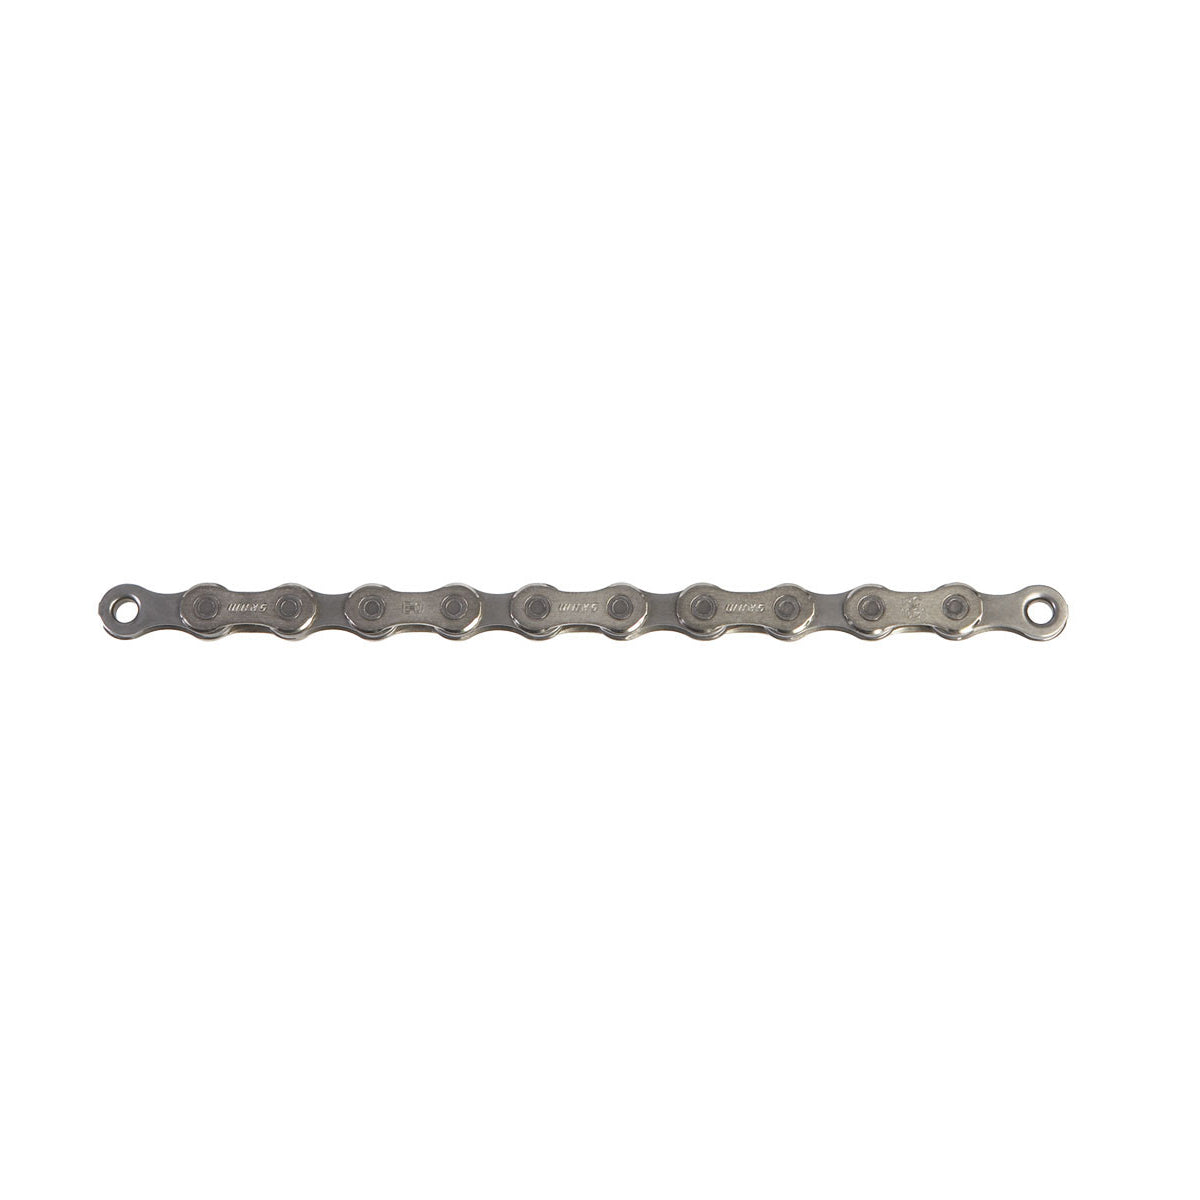 Sram Pc1031 10spd Chain Silver/grey 114 Link With Powerlock